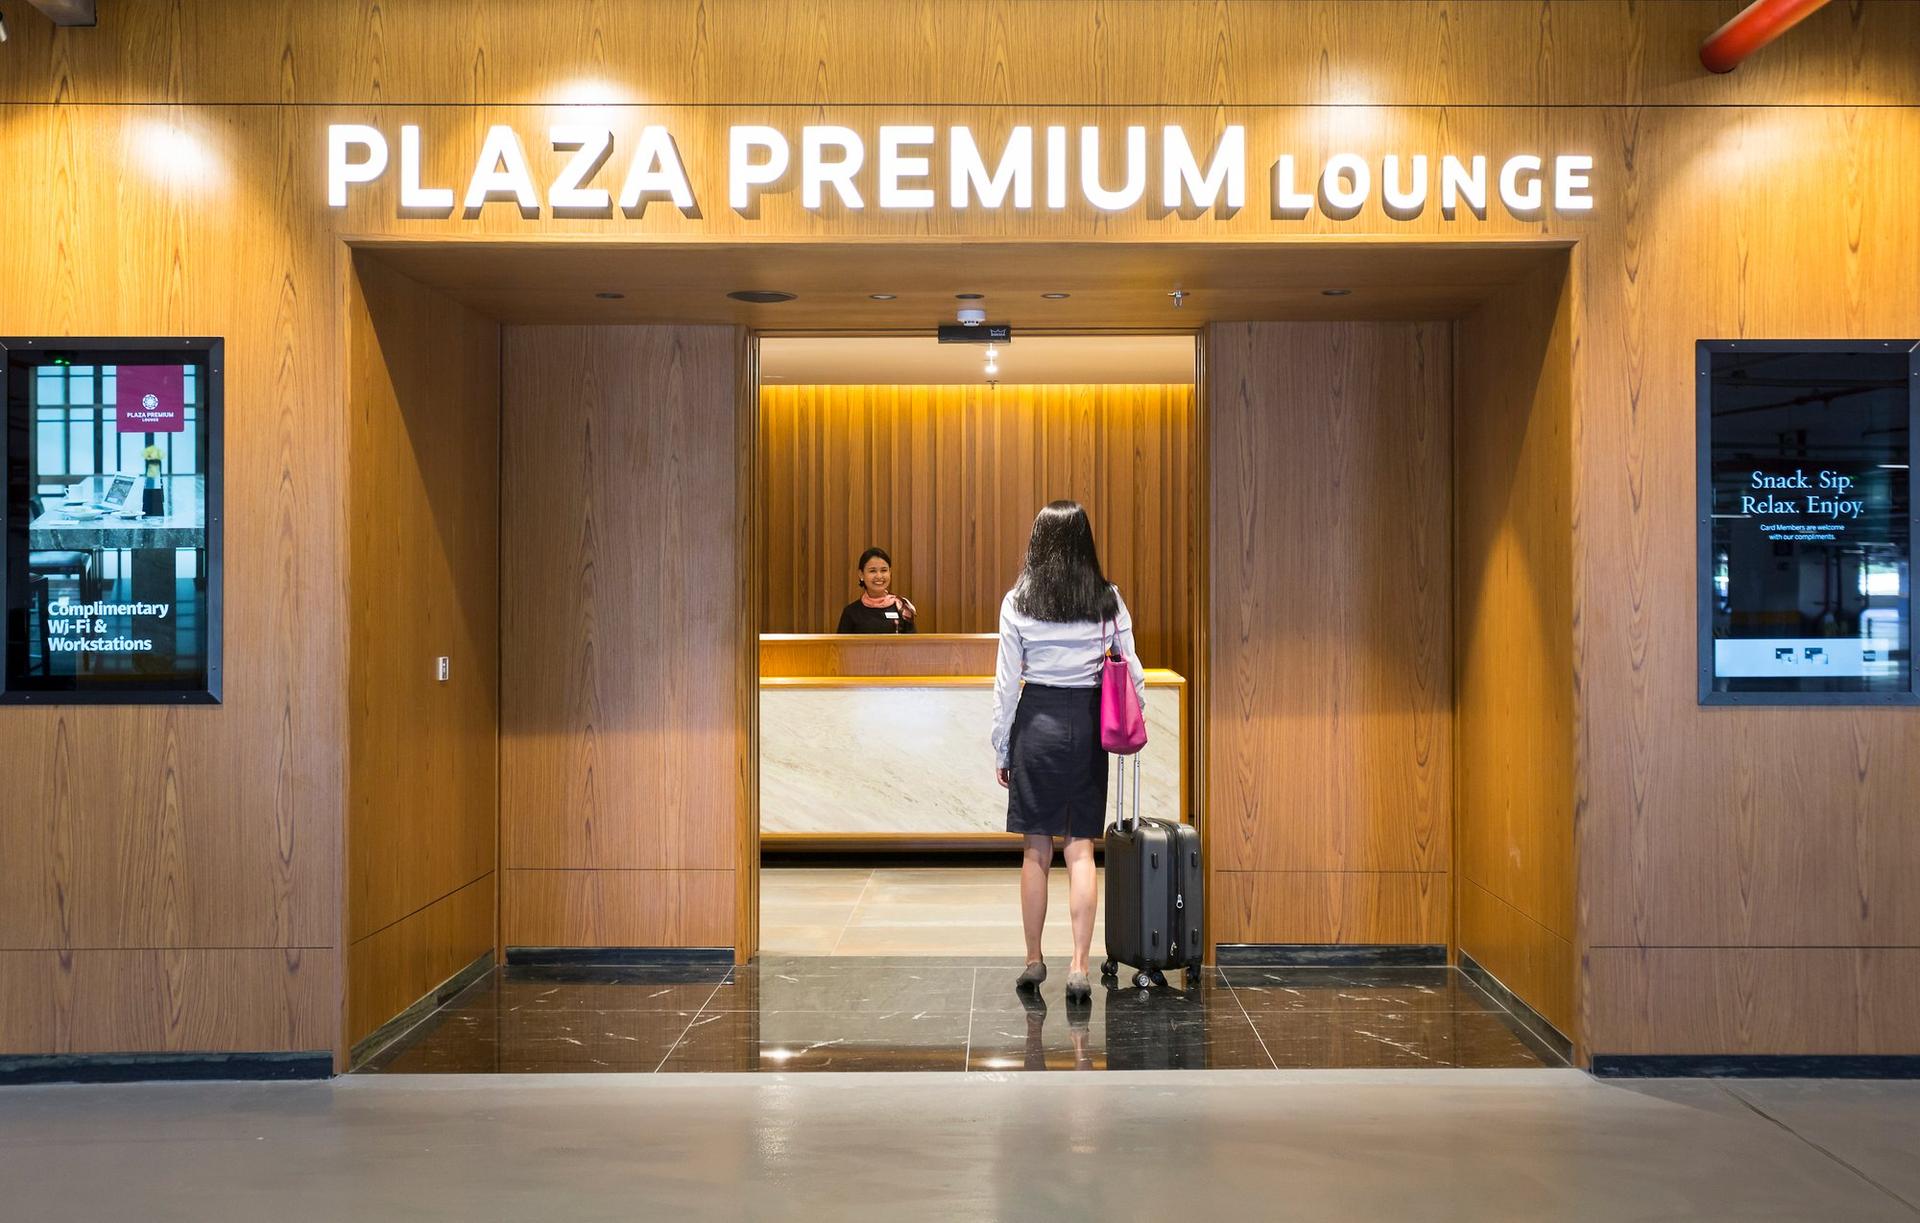 Plaza Premium Lounge (Arrivals) image 4 of 22